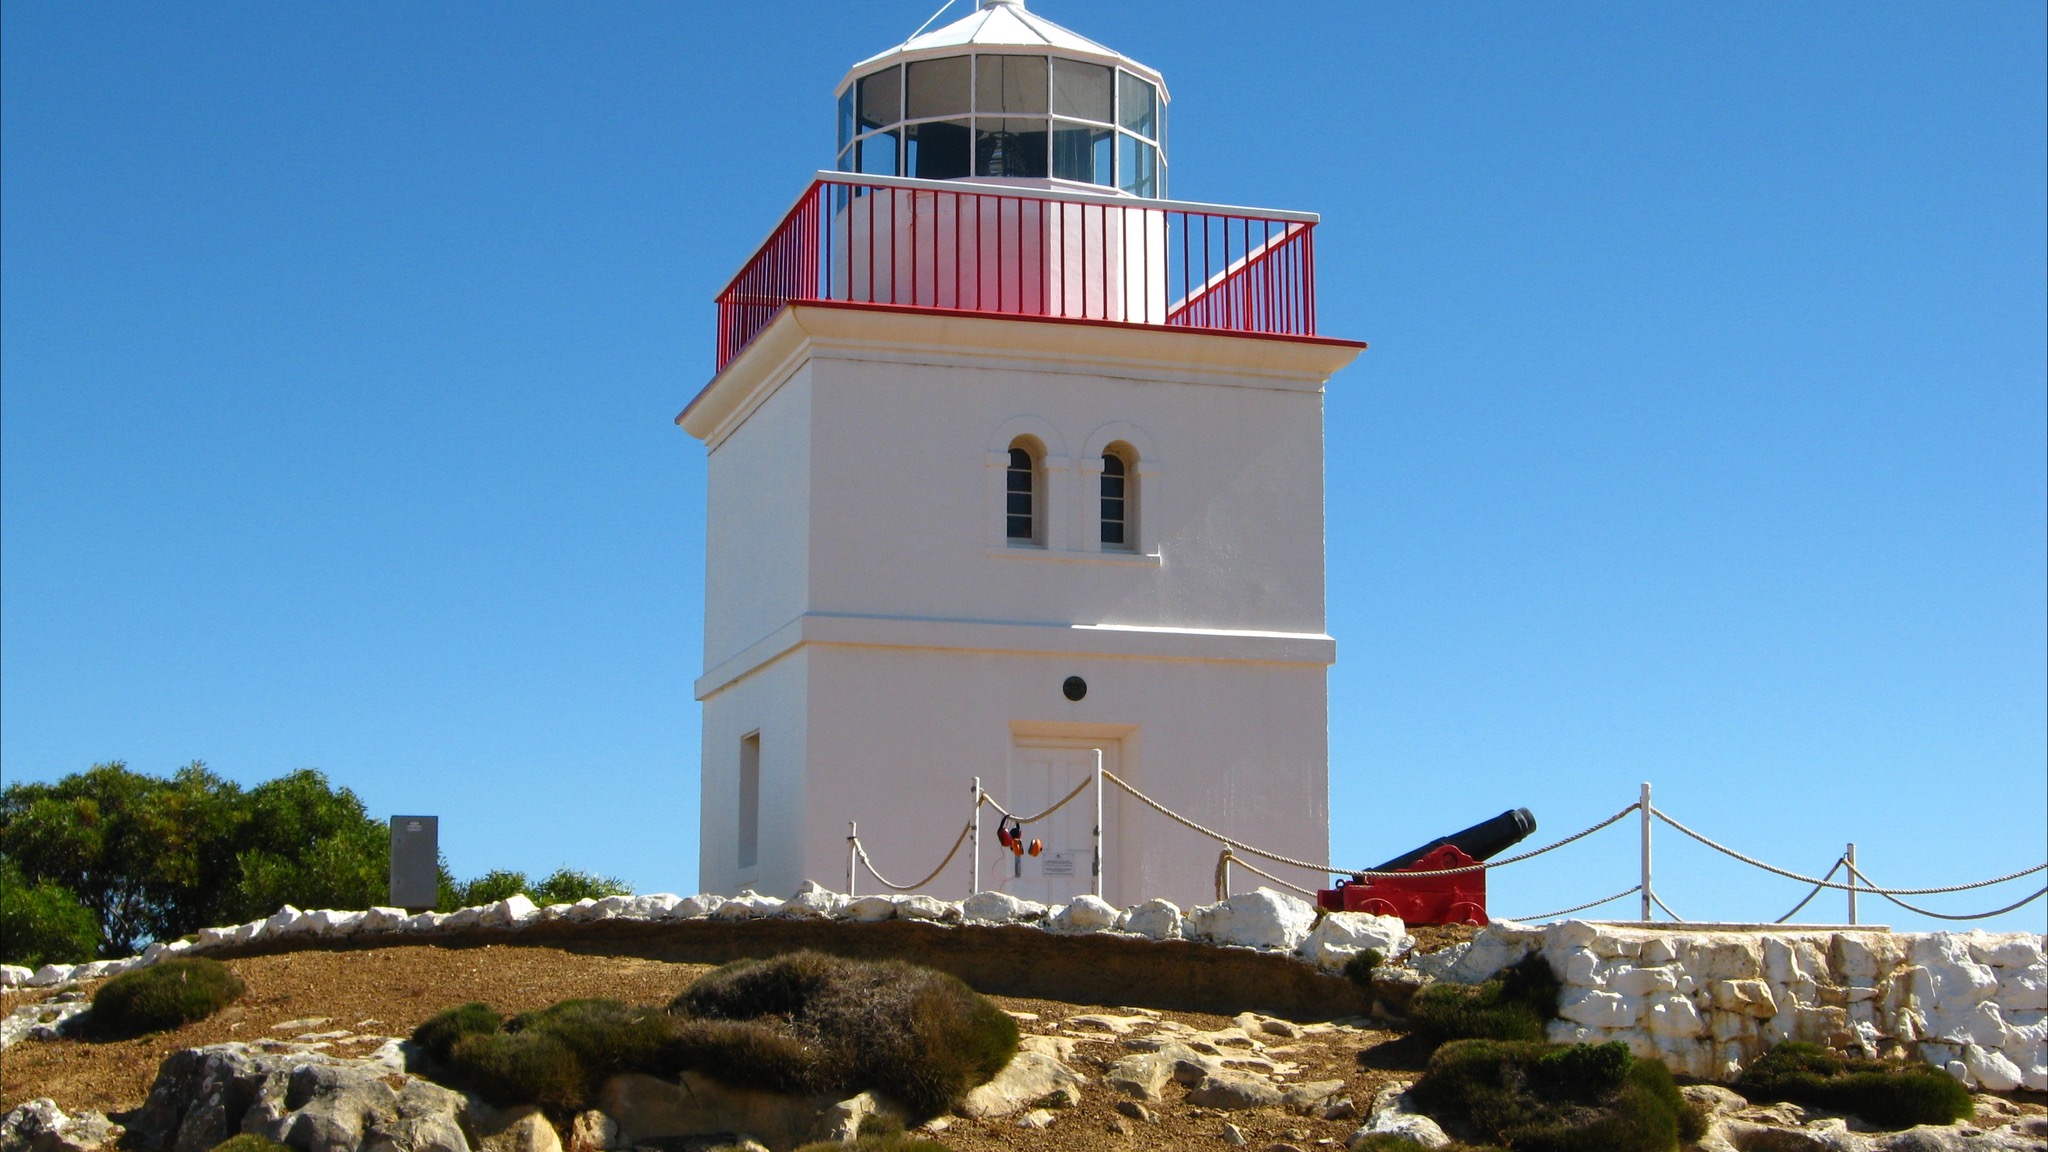 Cape Borda Lighthouse Keepers Heritage Accommodation - VIC Tourism